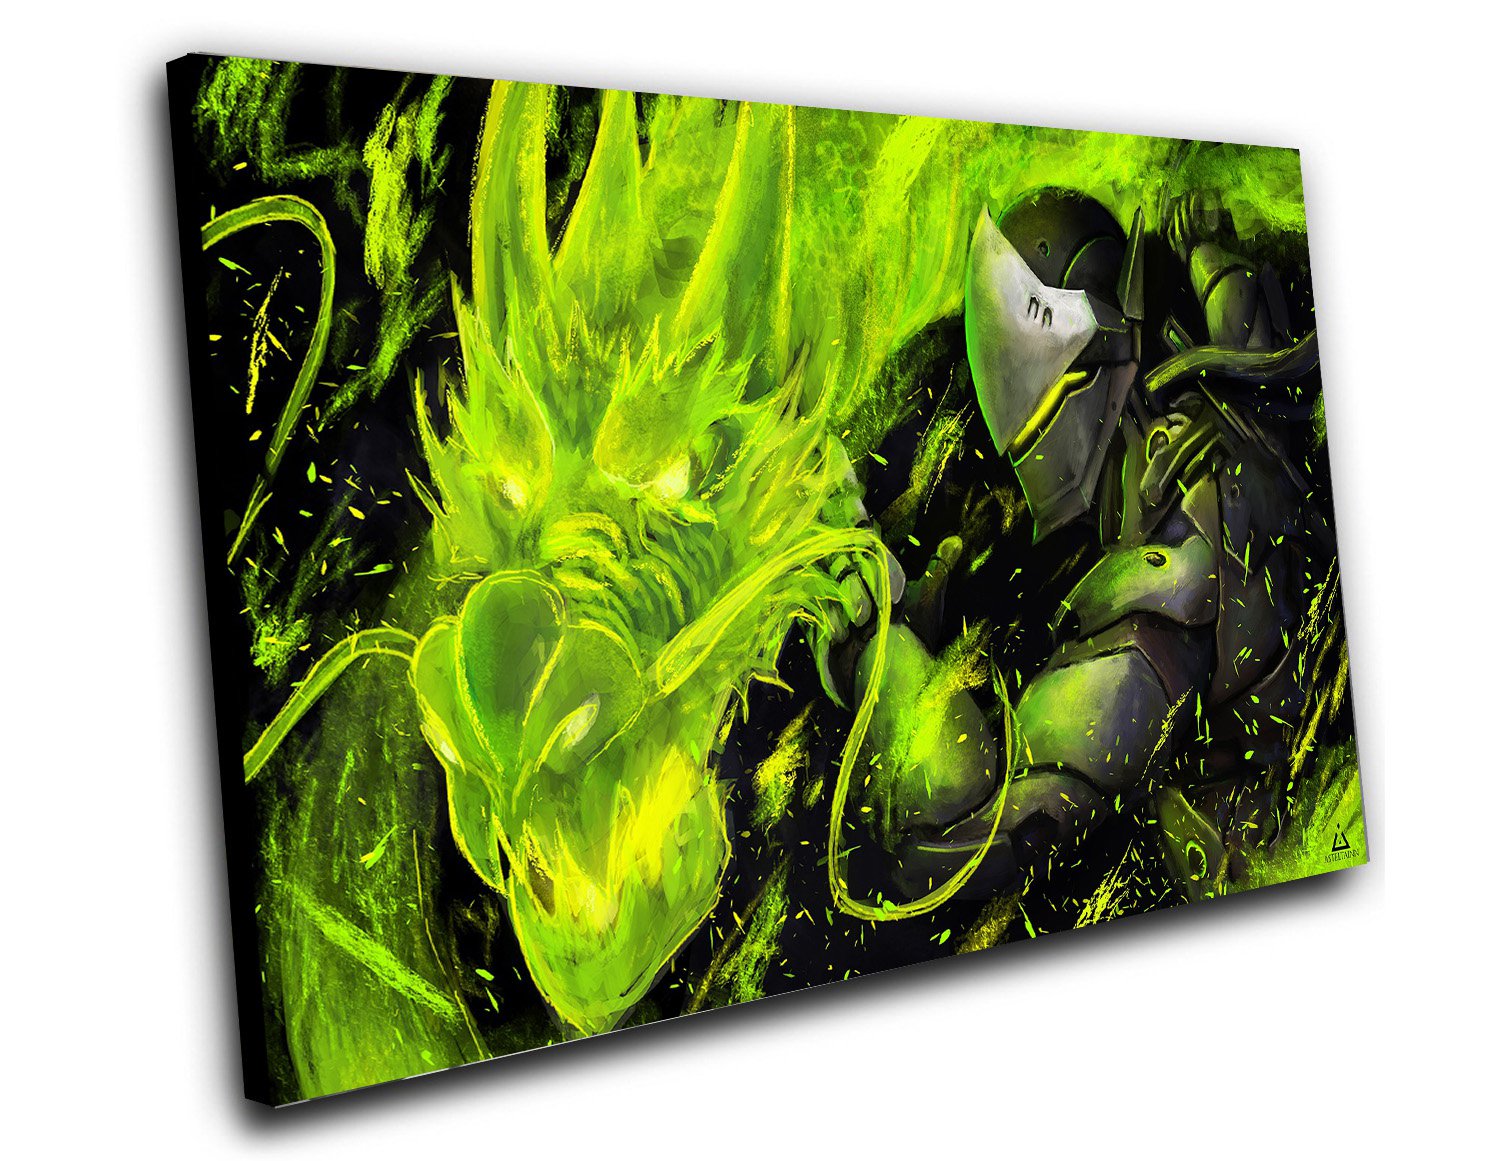 Overwatch Genji   12"x16" (30cm/40cm) Canvas Print